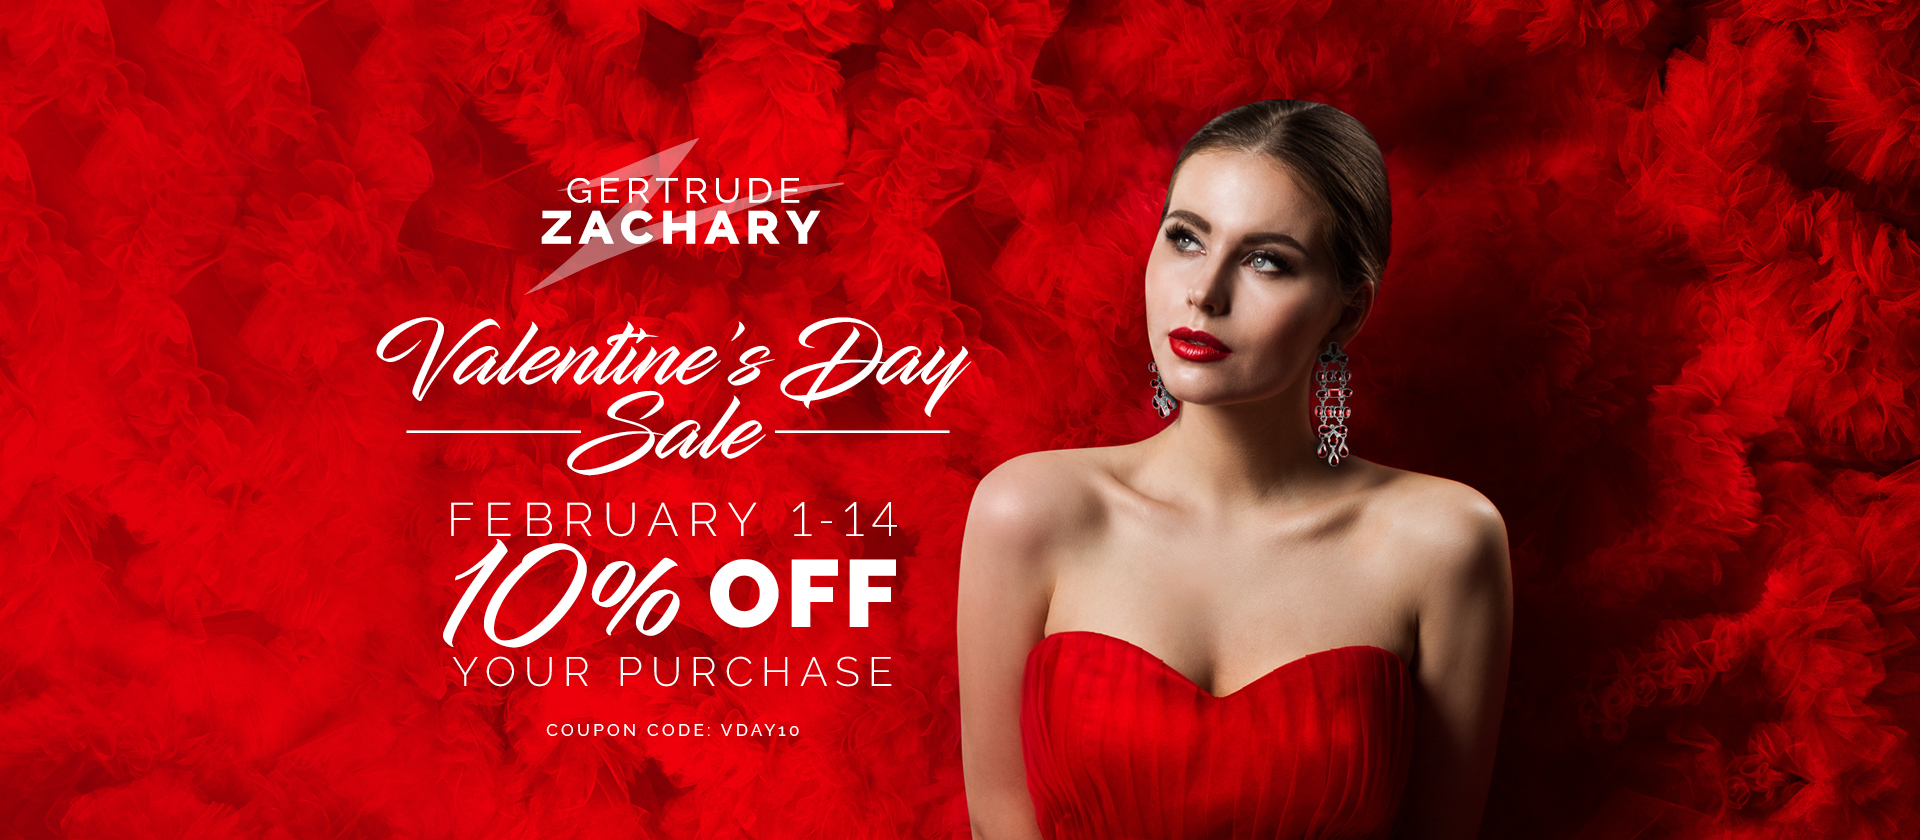 Valentine's Day Sale at Gertrude Zachary